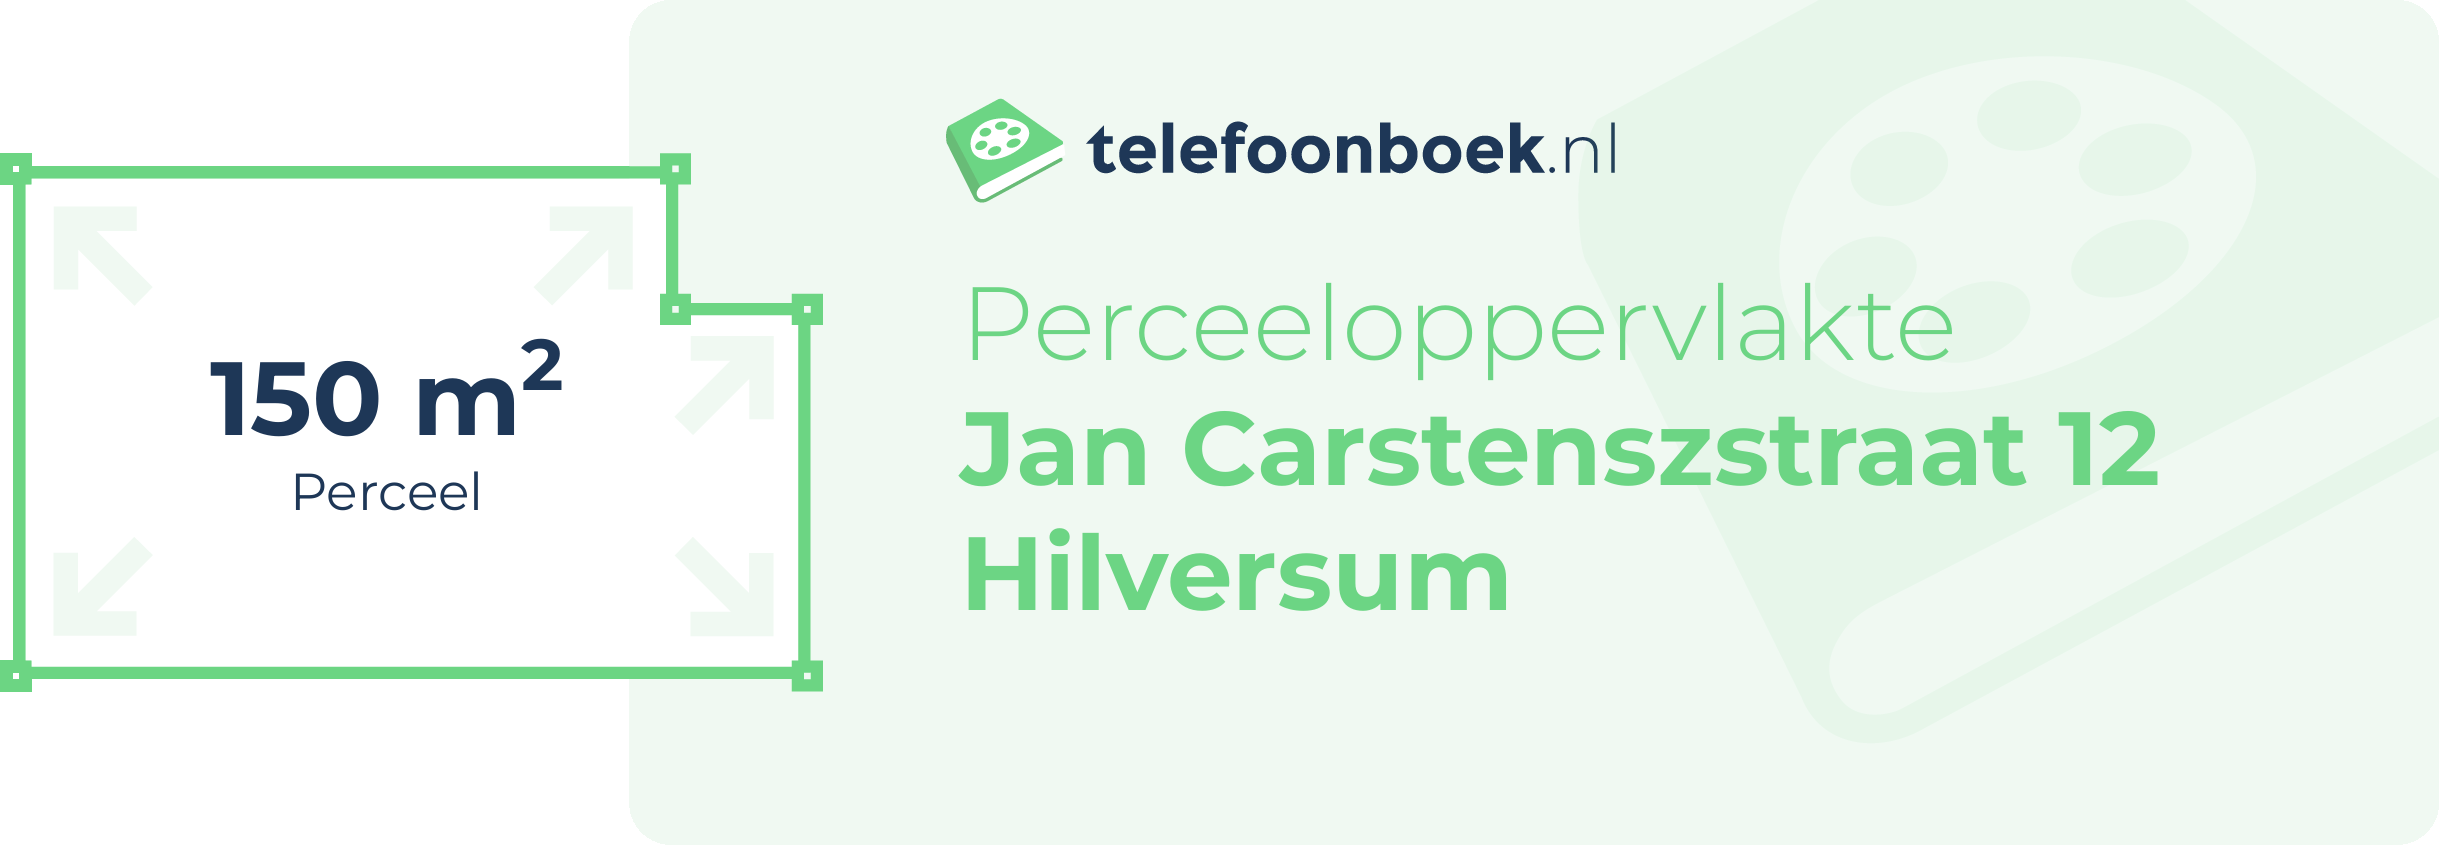 Perceeloppervlakte Jan Carstenszstraat 12 Hilversum